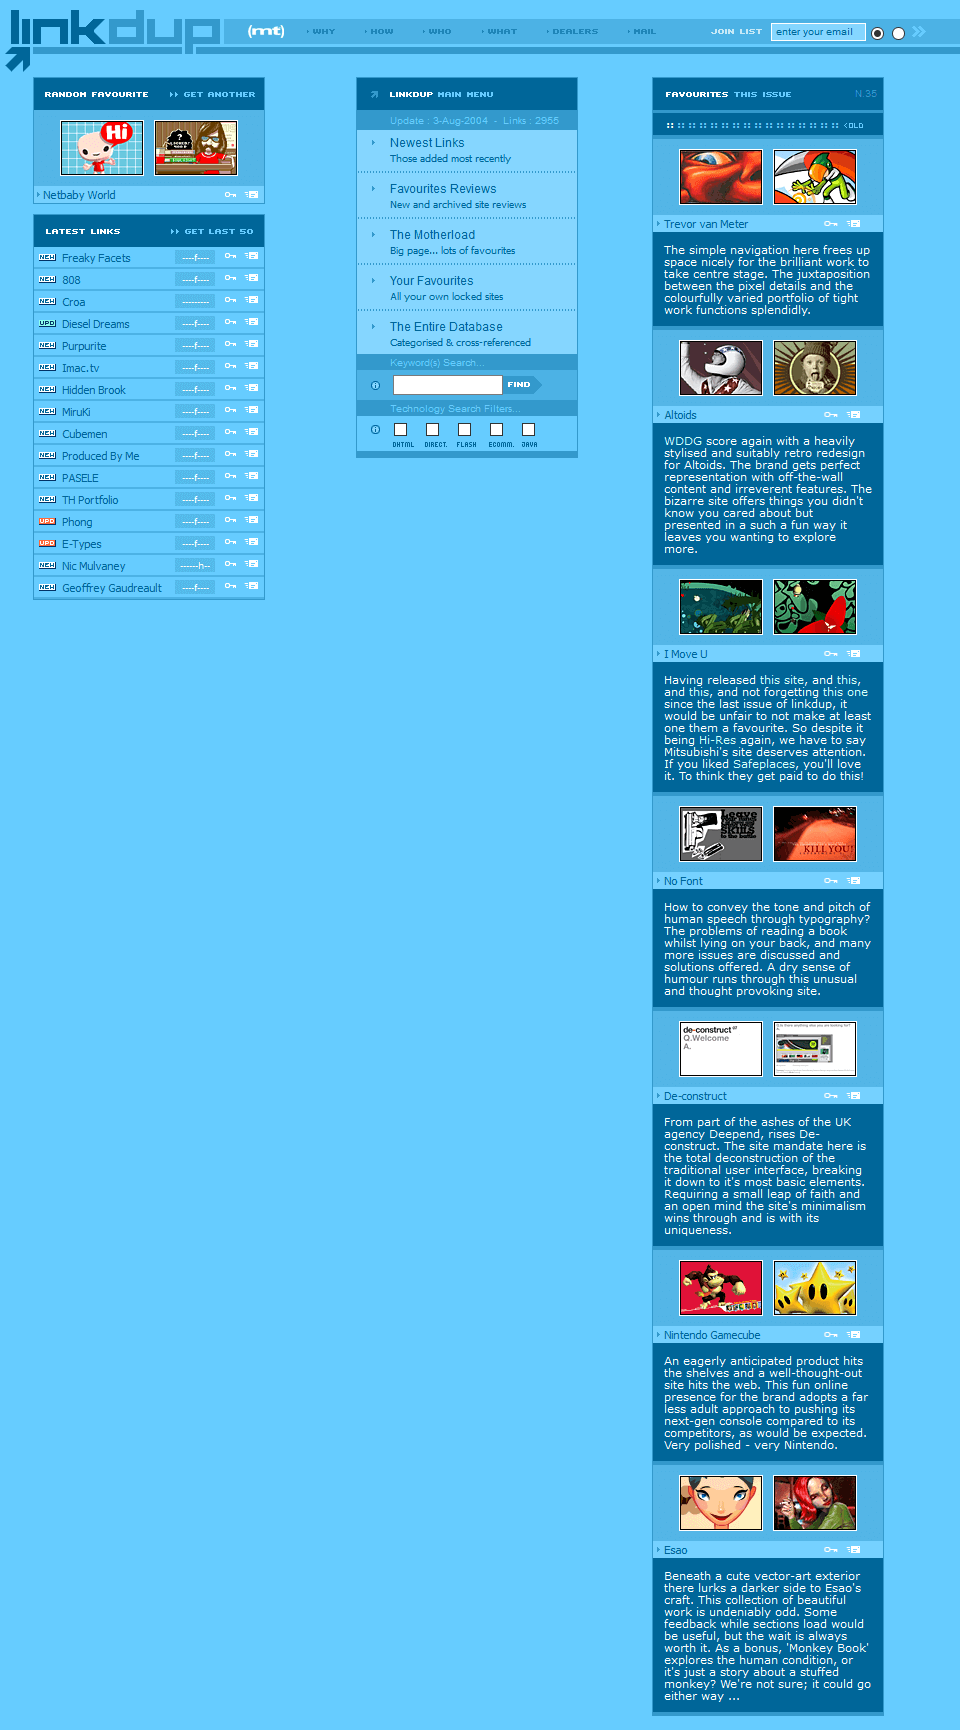 Linkdup website in 2004